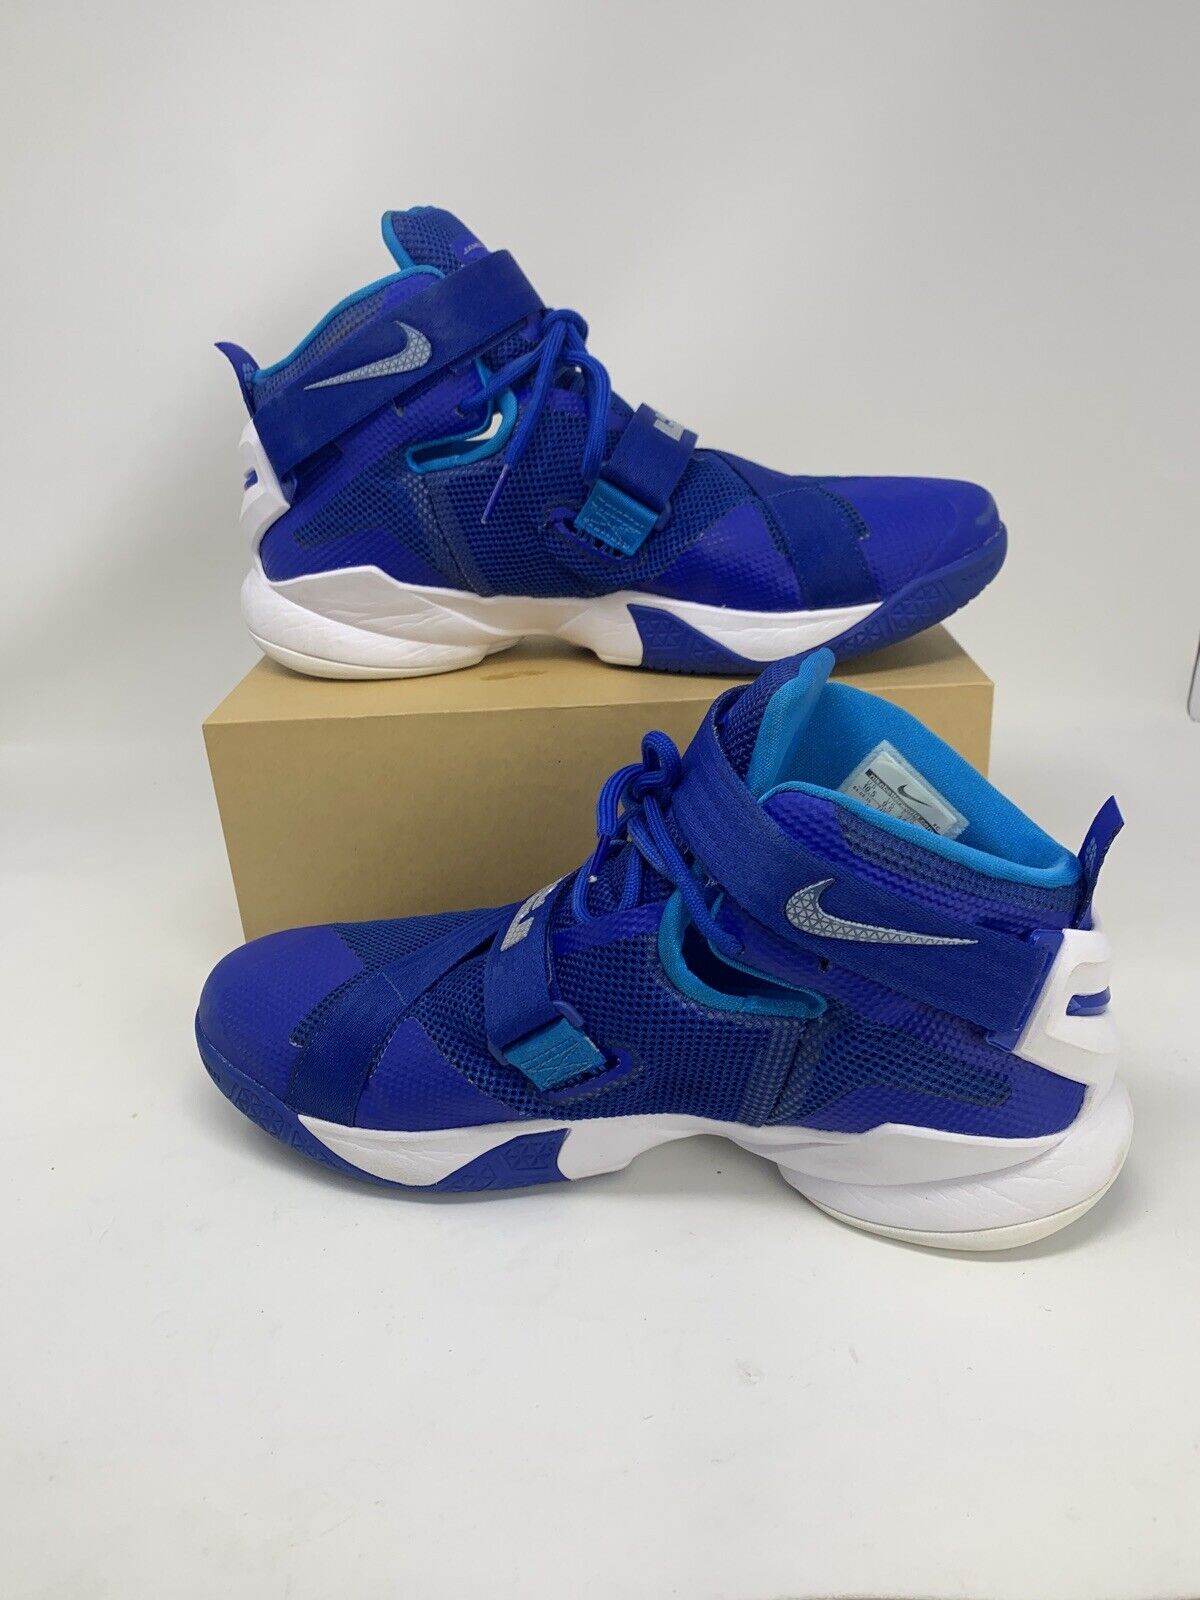 Nike Lebron James Soldier IX 9 Shoes US Size 10.5 Blue White 